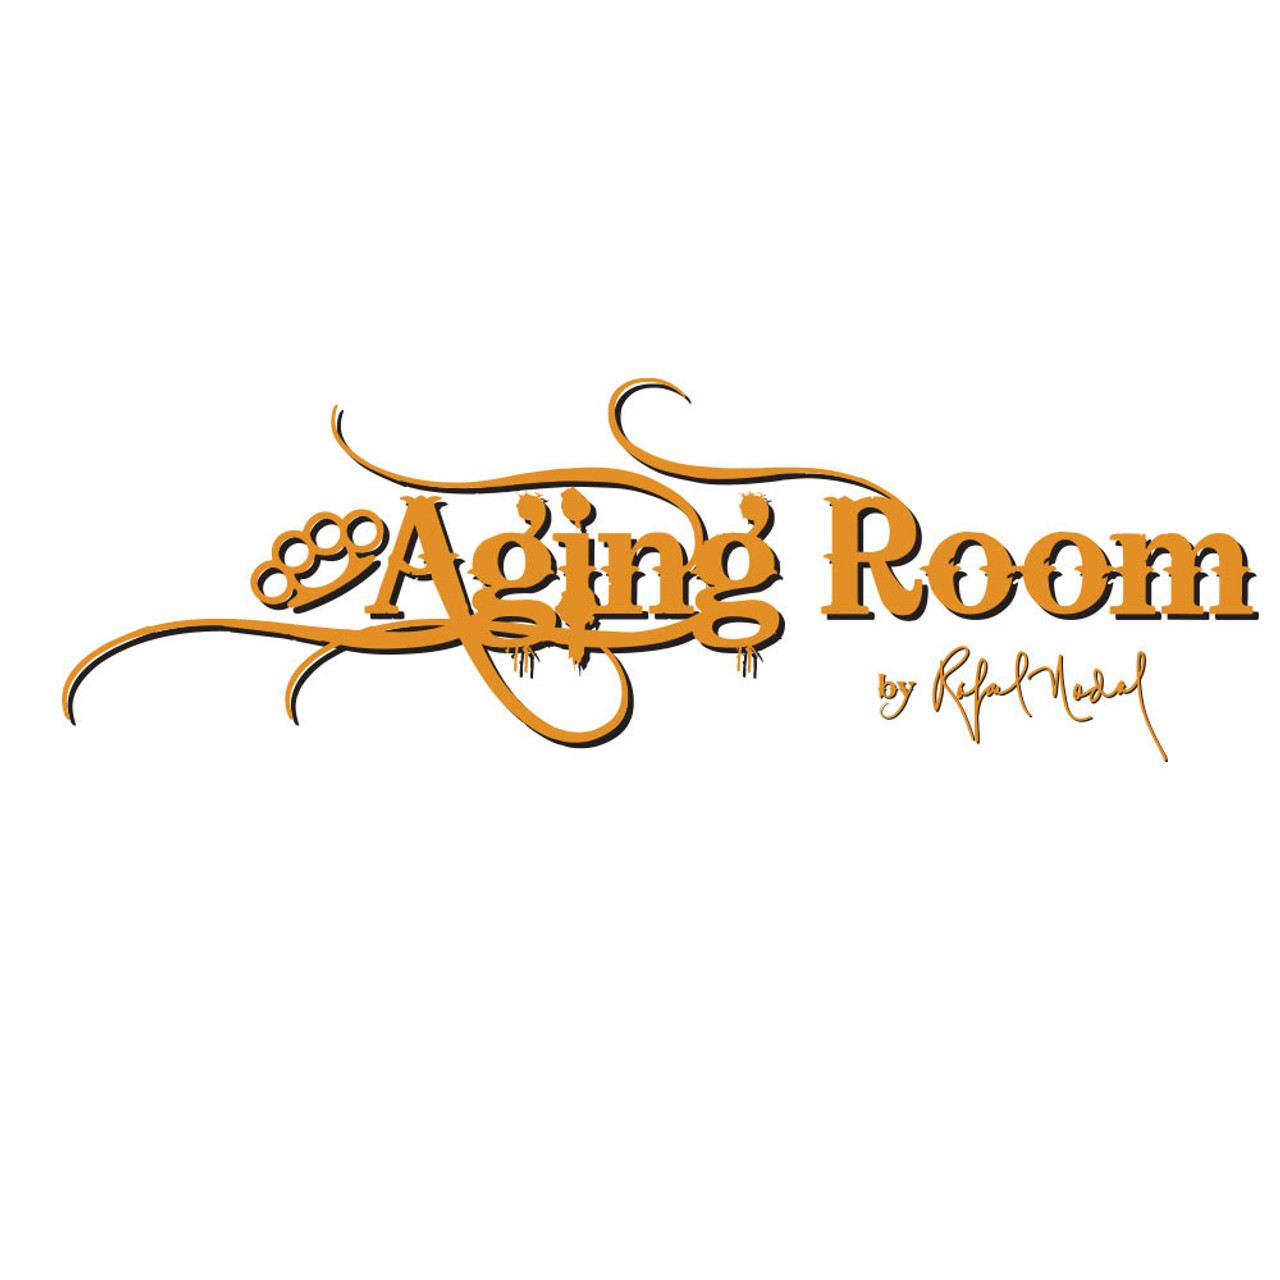 Aging Room Core by Rafael Nodal Logo